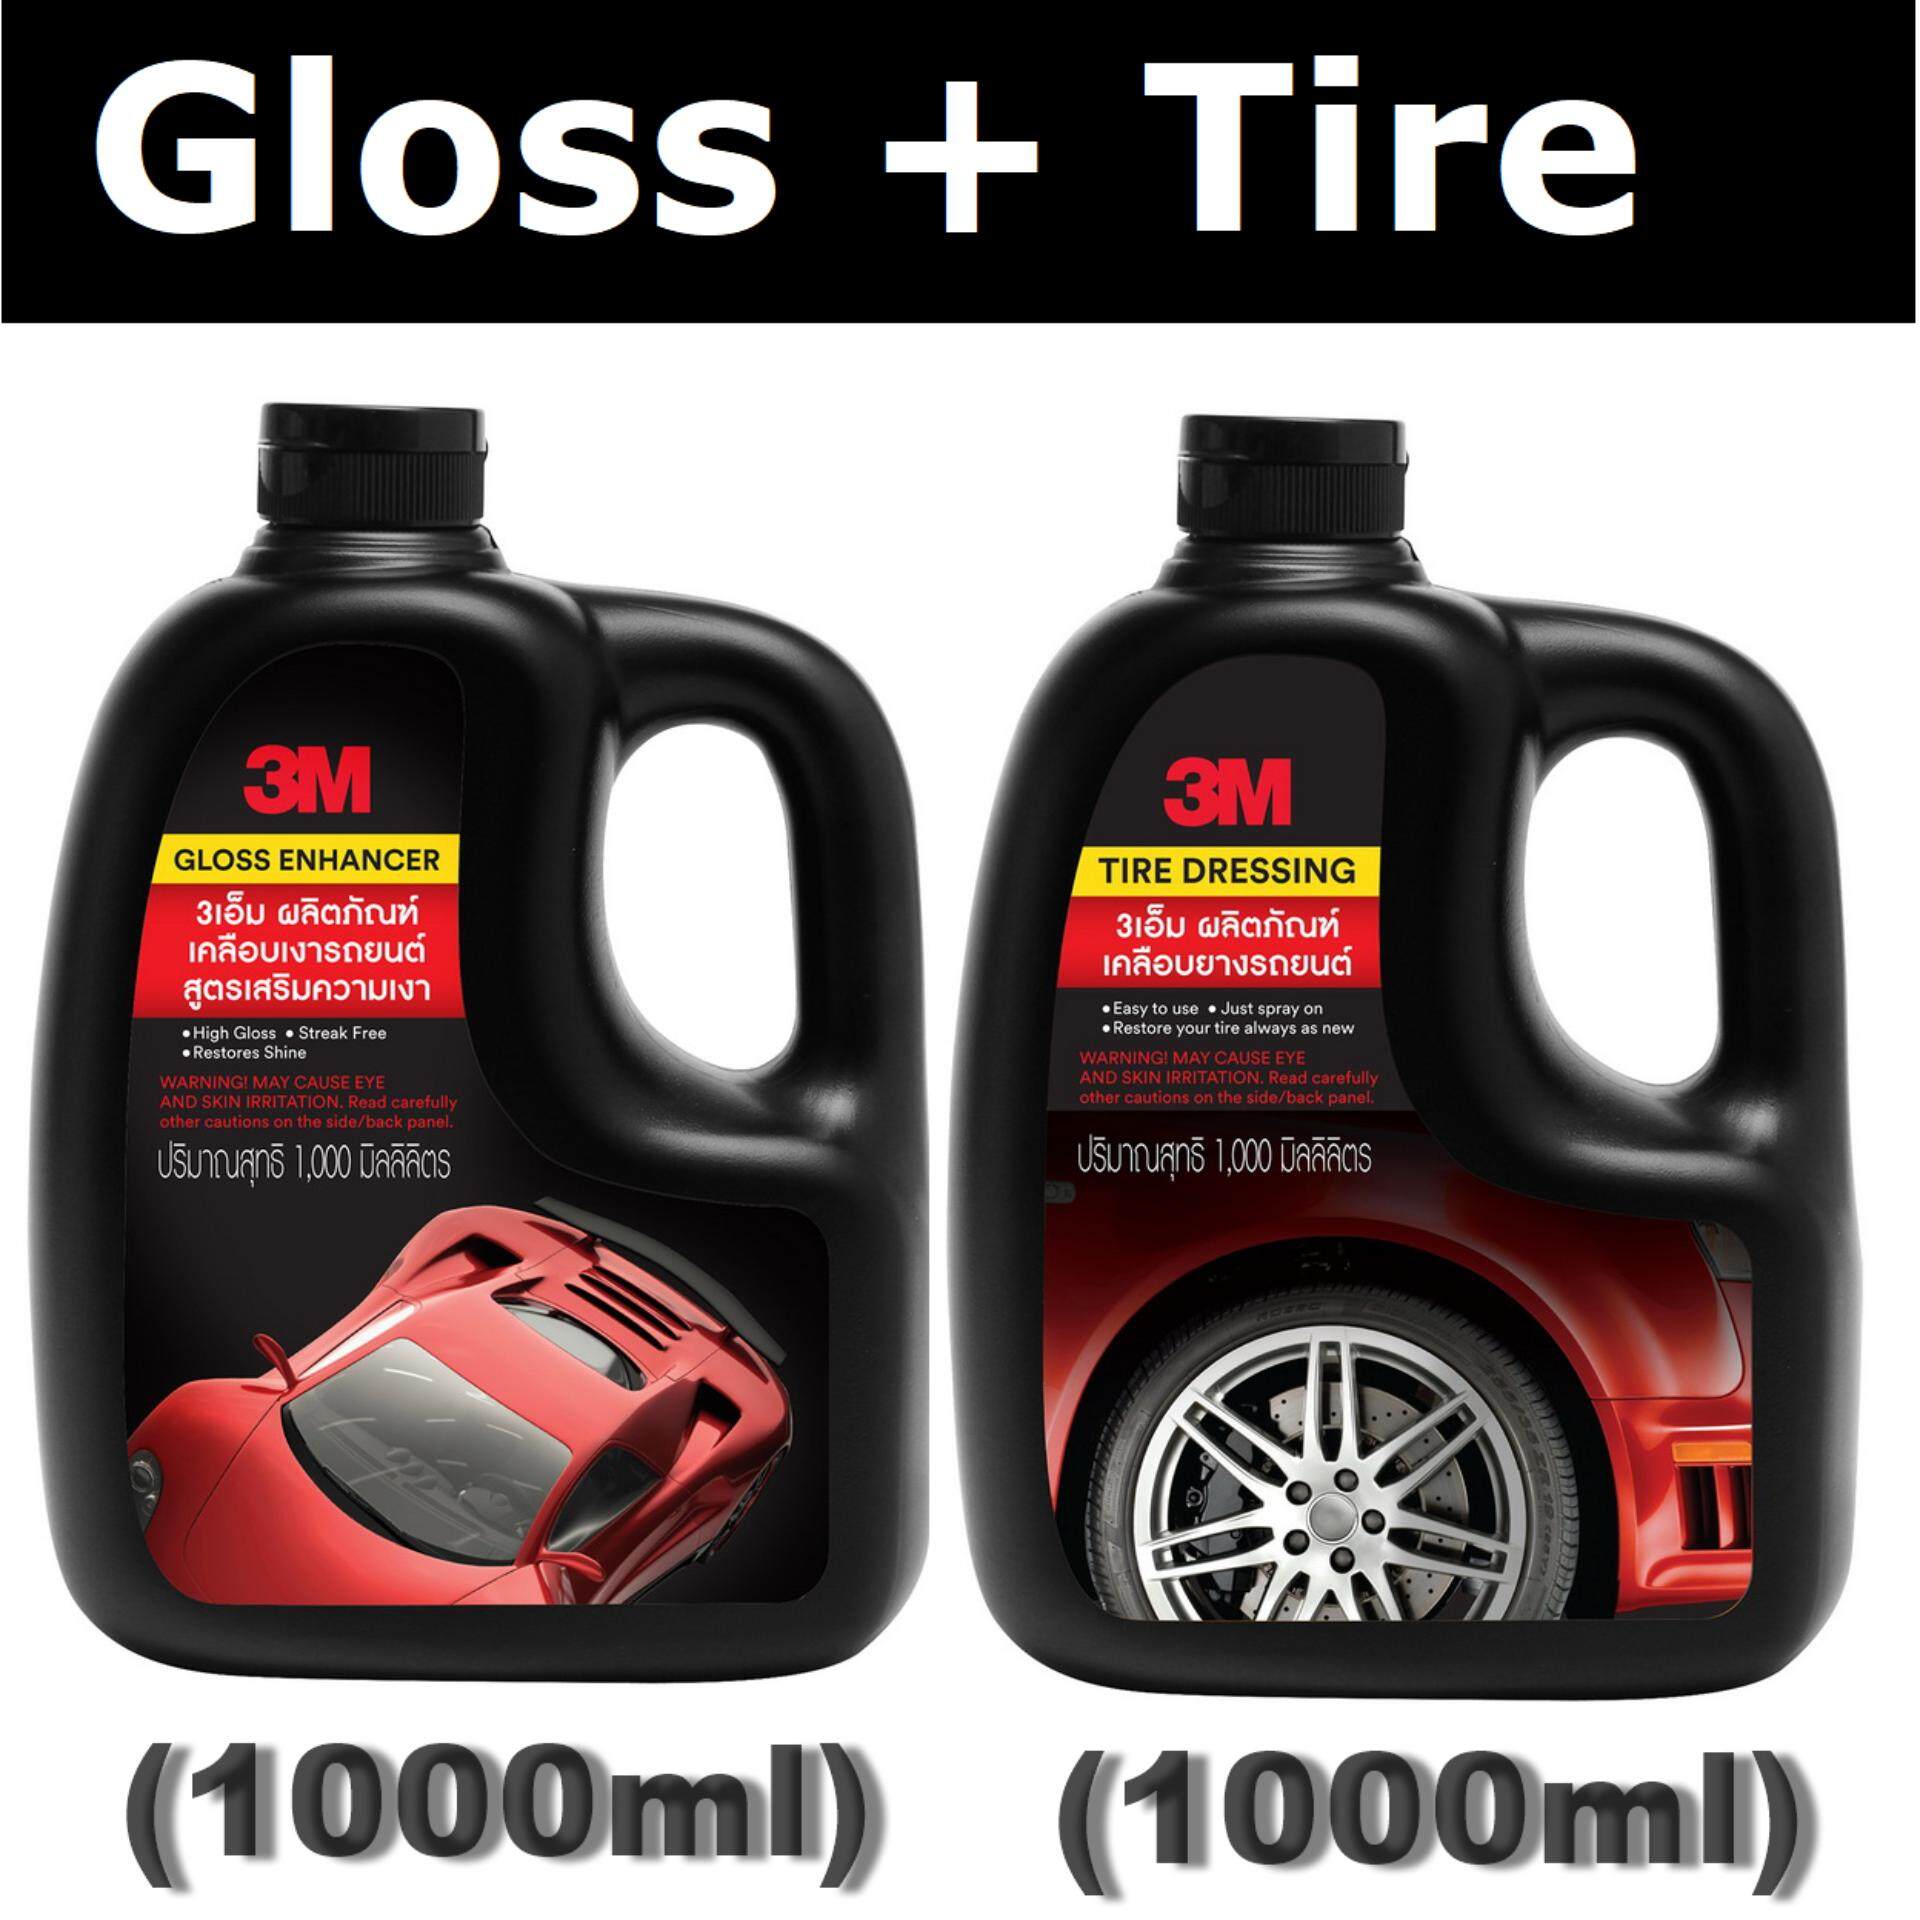 3M 3903GLT/1 สเปรย์เคลือบเงาสีรถ Gloss Enhancer 1000ml+ 3904TLT/1 ผลิตภัณฑ์เคลือบเงายางรถยนต์ Tire Dressing 1000ml